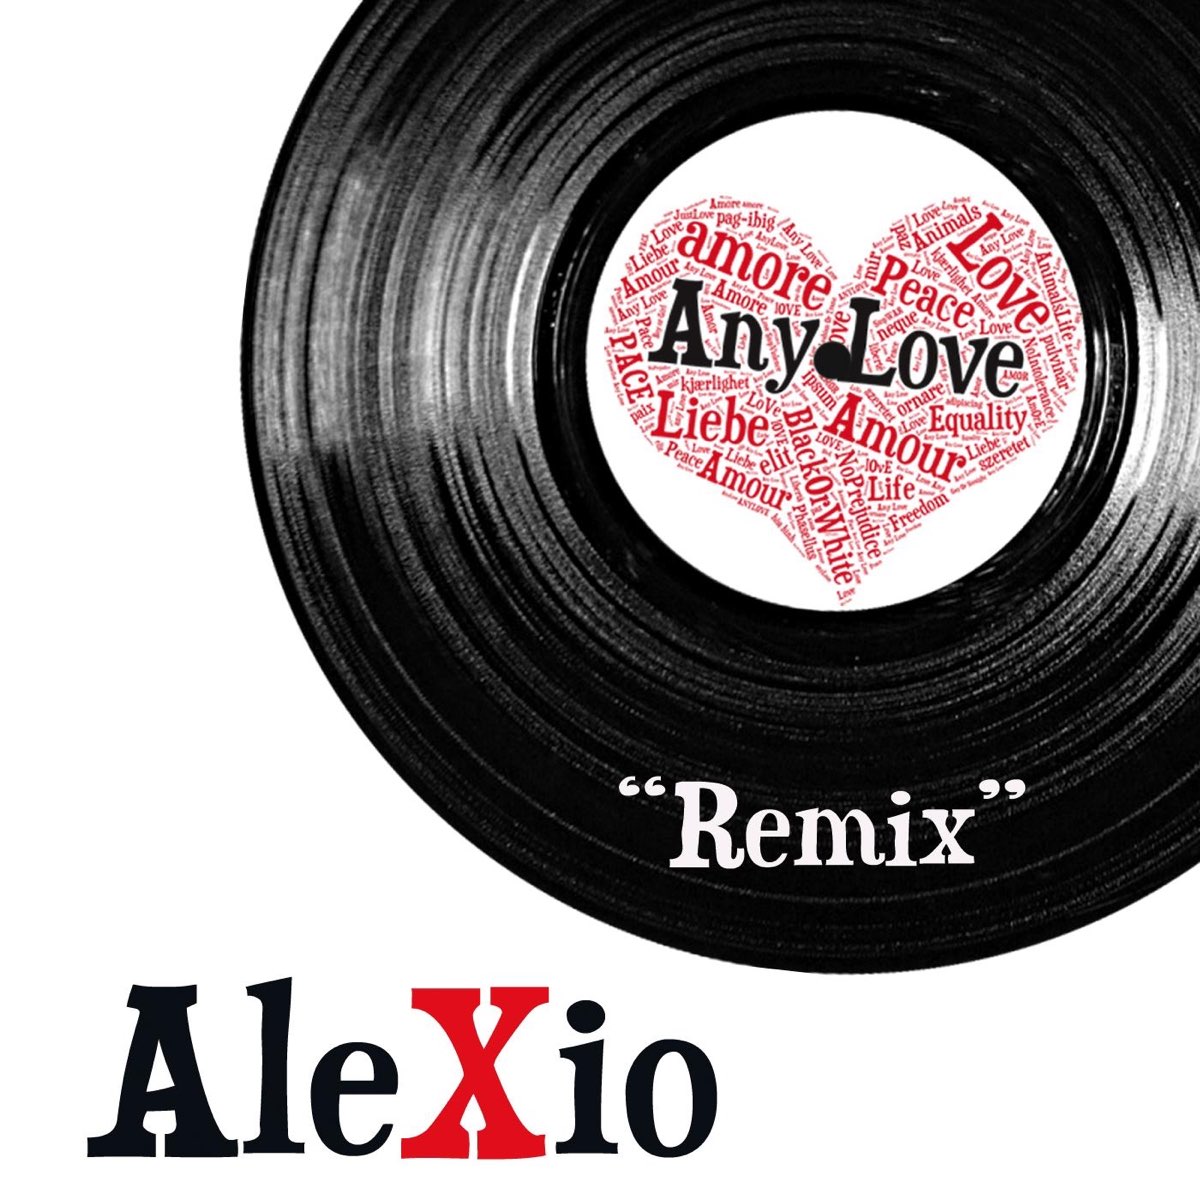 Ckay love remix. Love Remix. Lovely песня ремикс. Любимые Remix. Any Love.